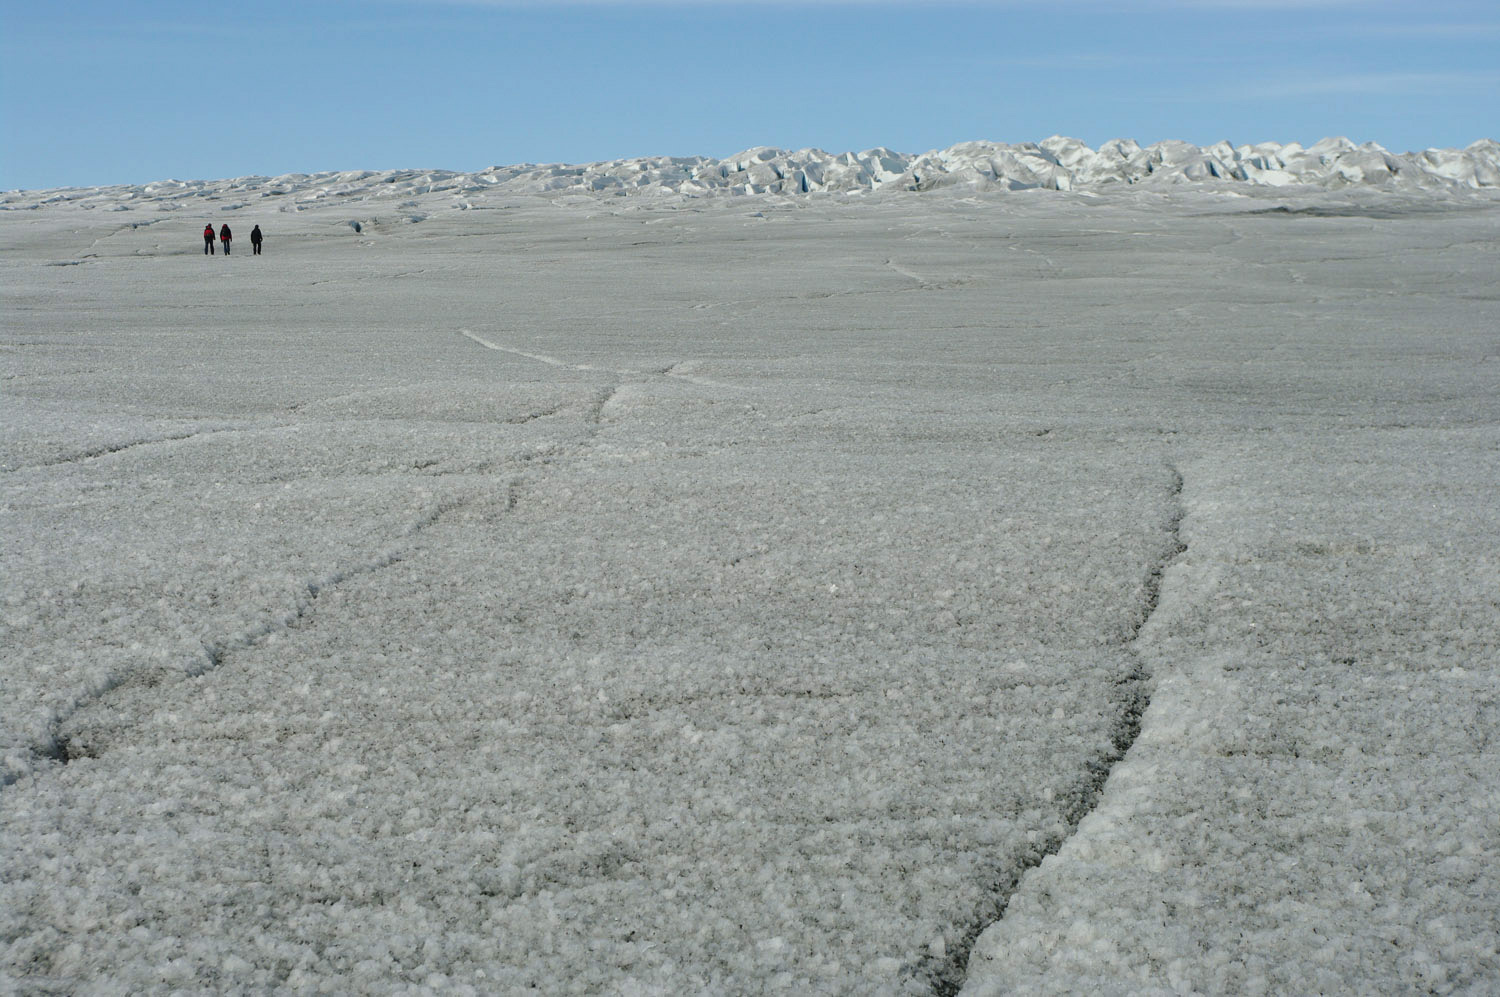 Icecap / Ice sheet 1 - East Greenland, greenland, travel